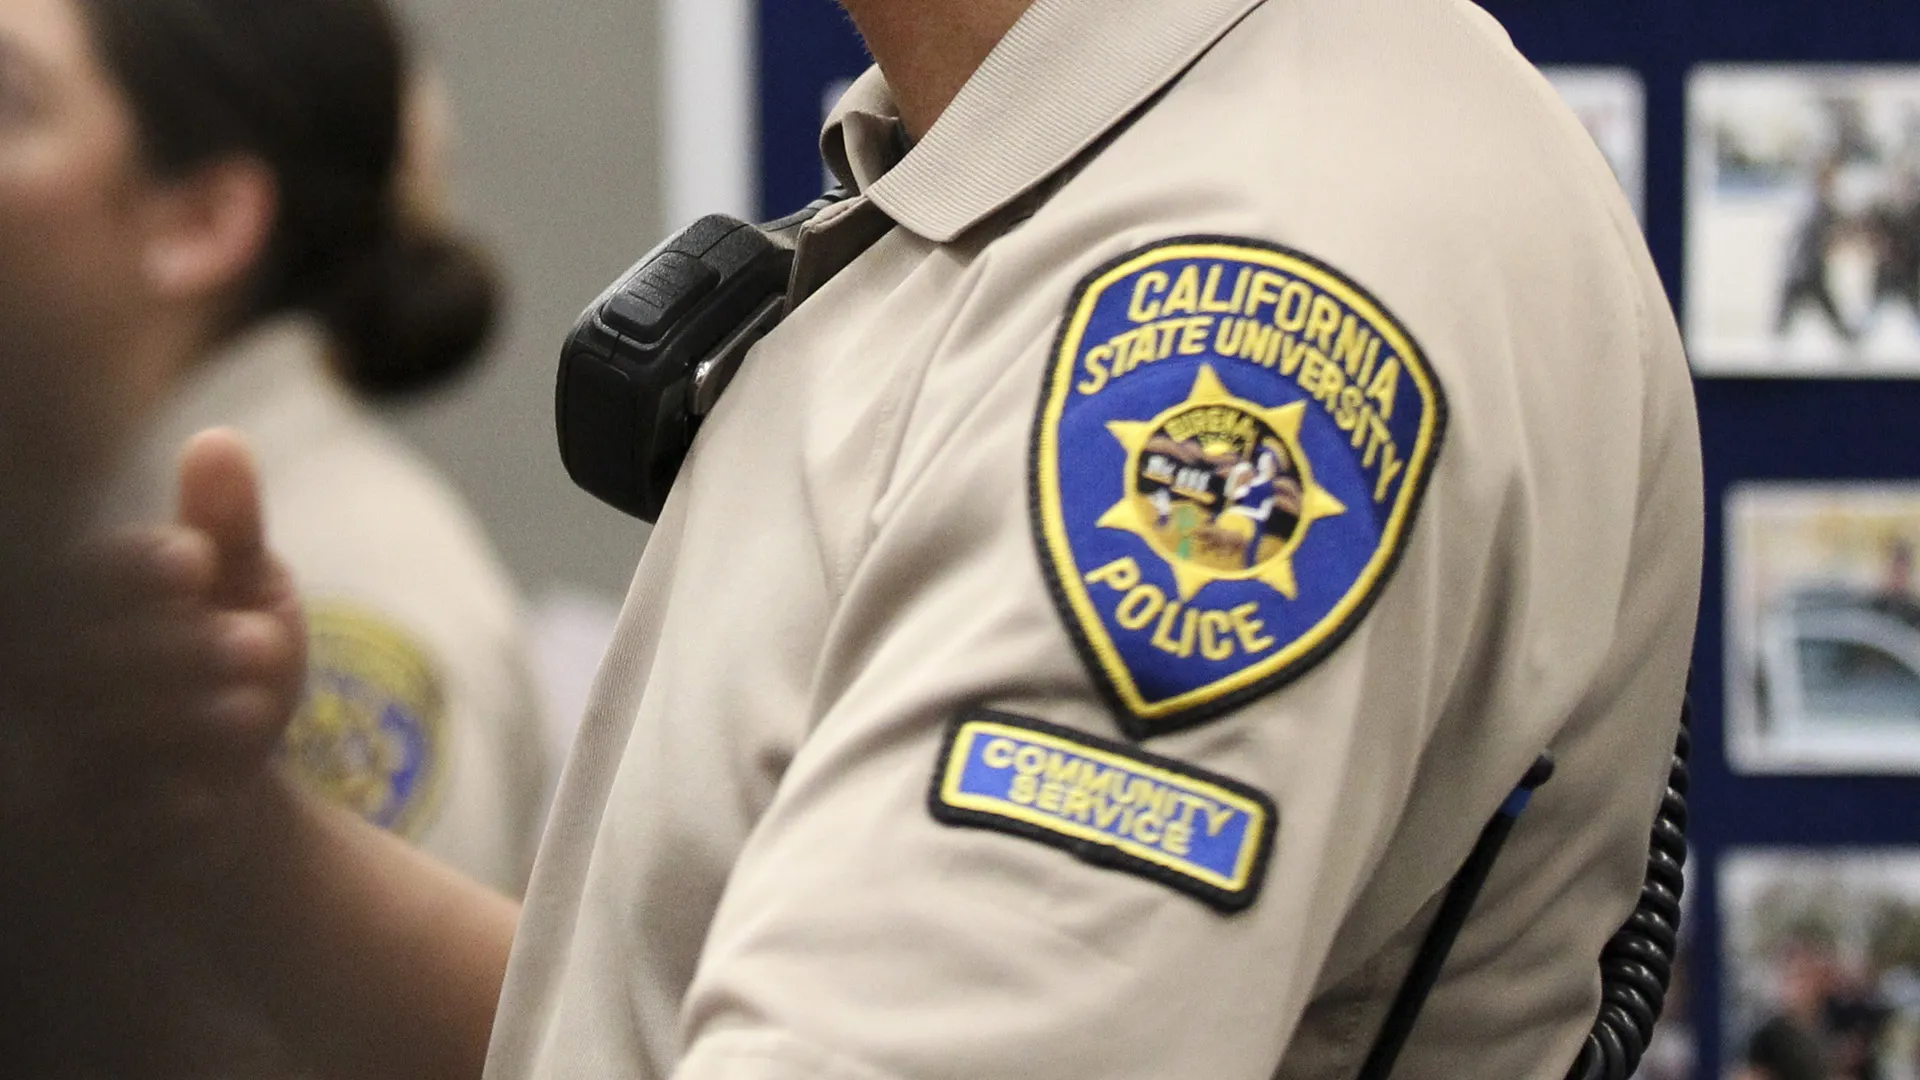 The UPD Community Service Officer patch on a uniform sleeve.